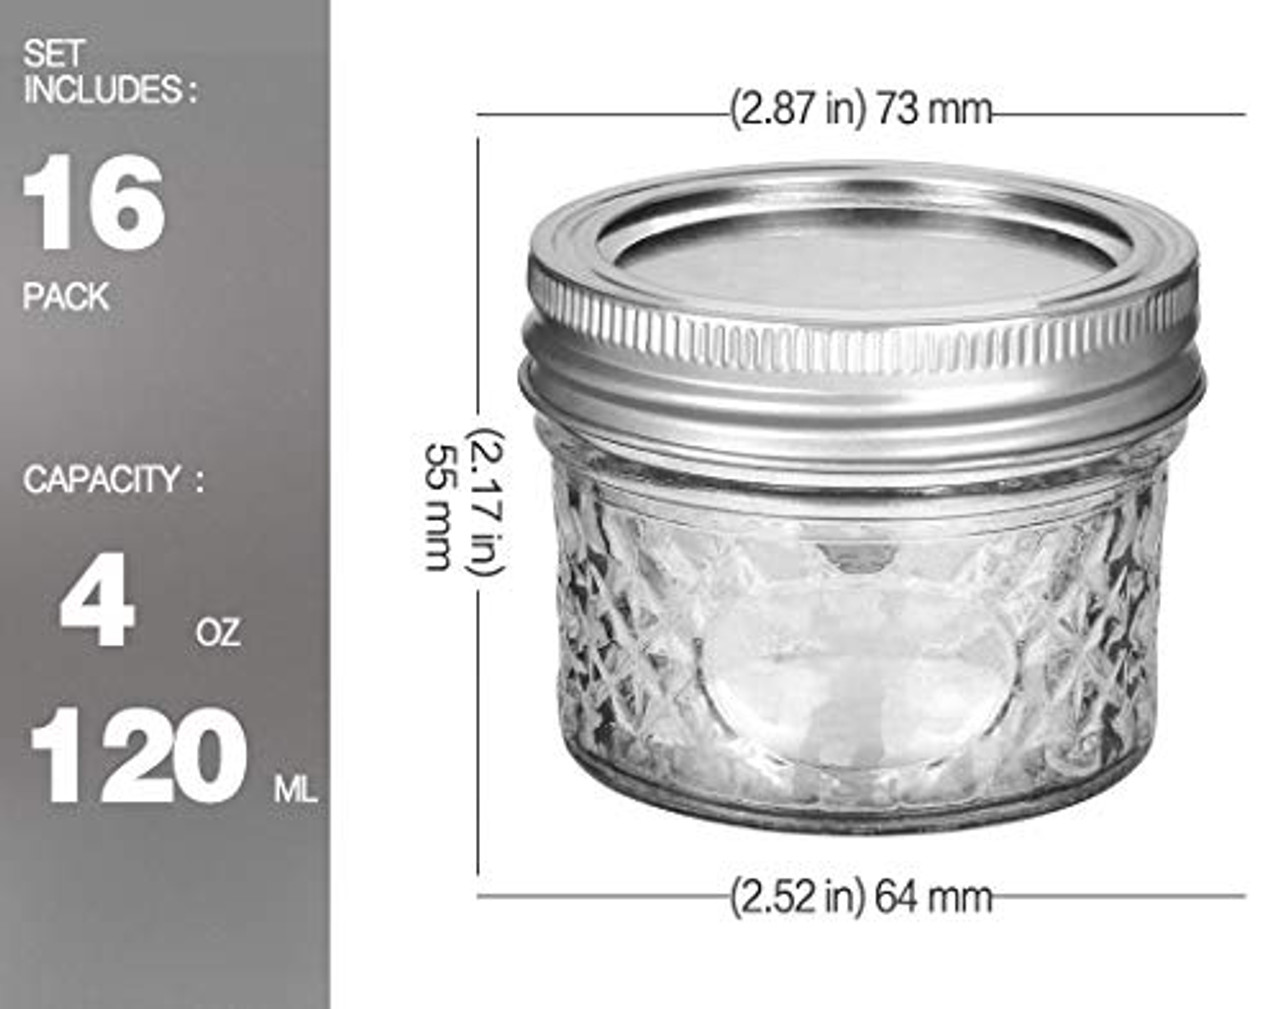 Mason Jars 6 Oz, Verones 30 Pack 6oz Mason jars Canning Jars Jelly Jars With Lids, Ideal for Jam, Honey, Wedding Favors, Shower Favors, Baby Foods